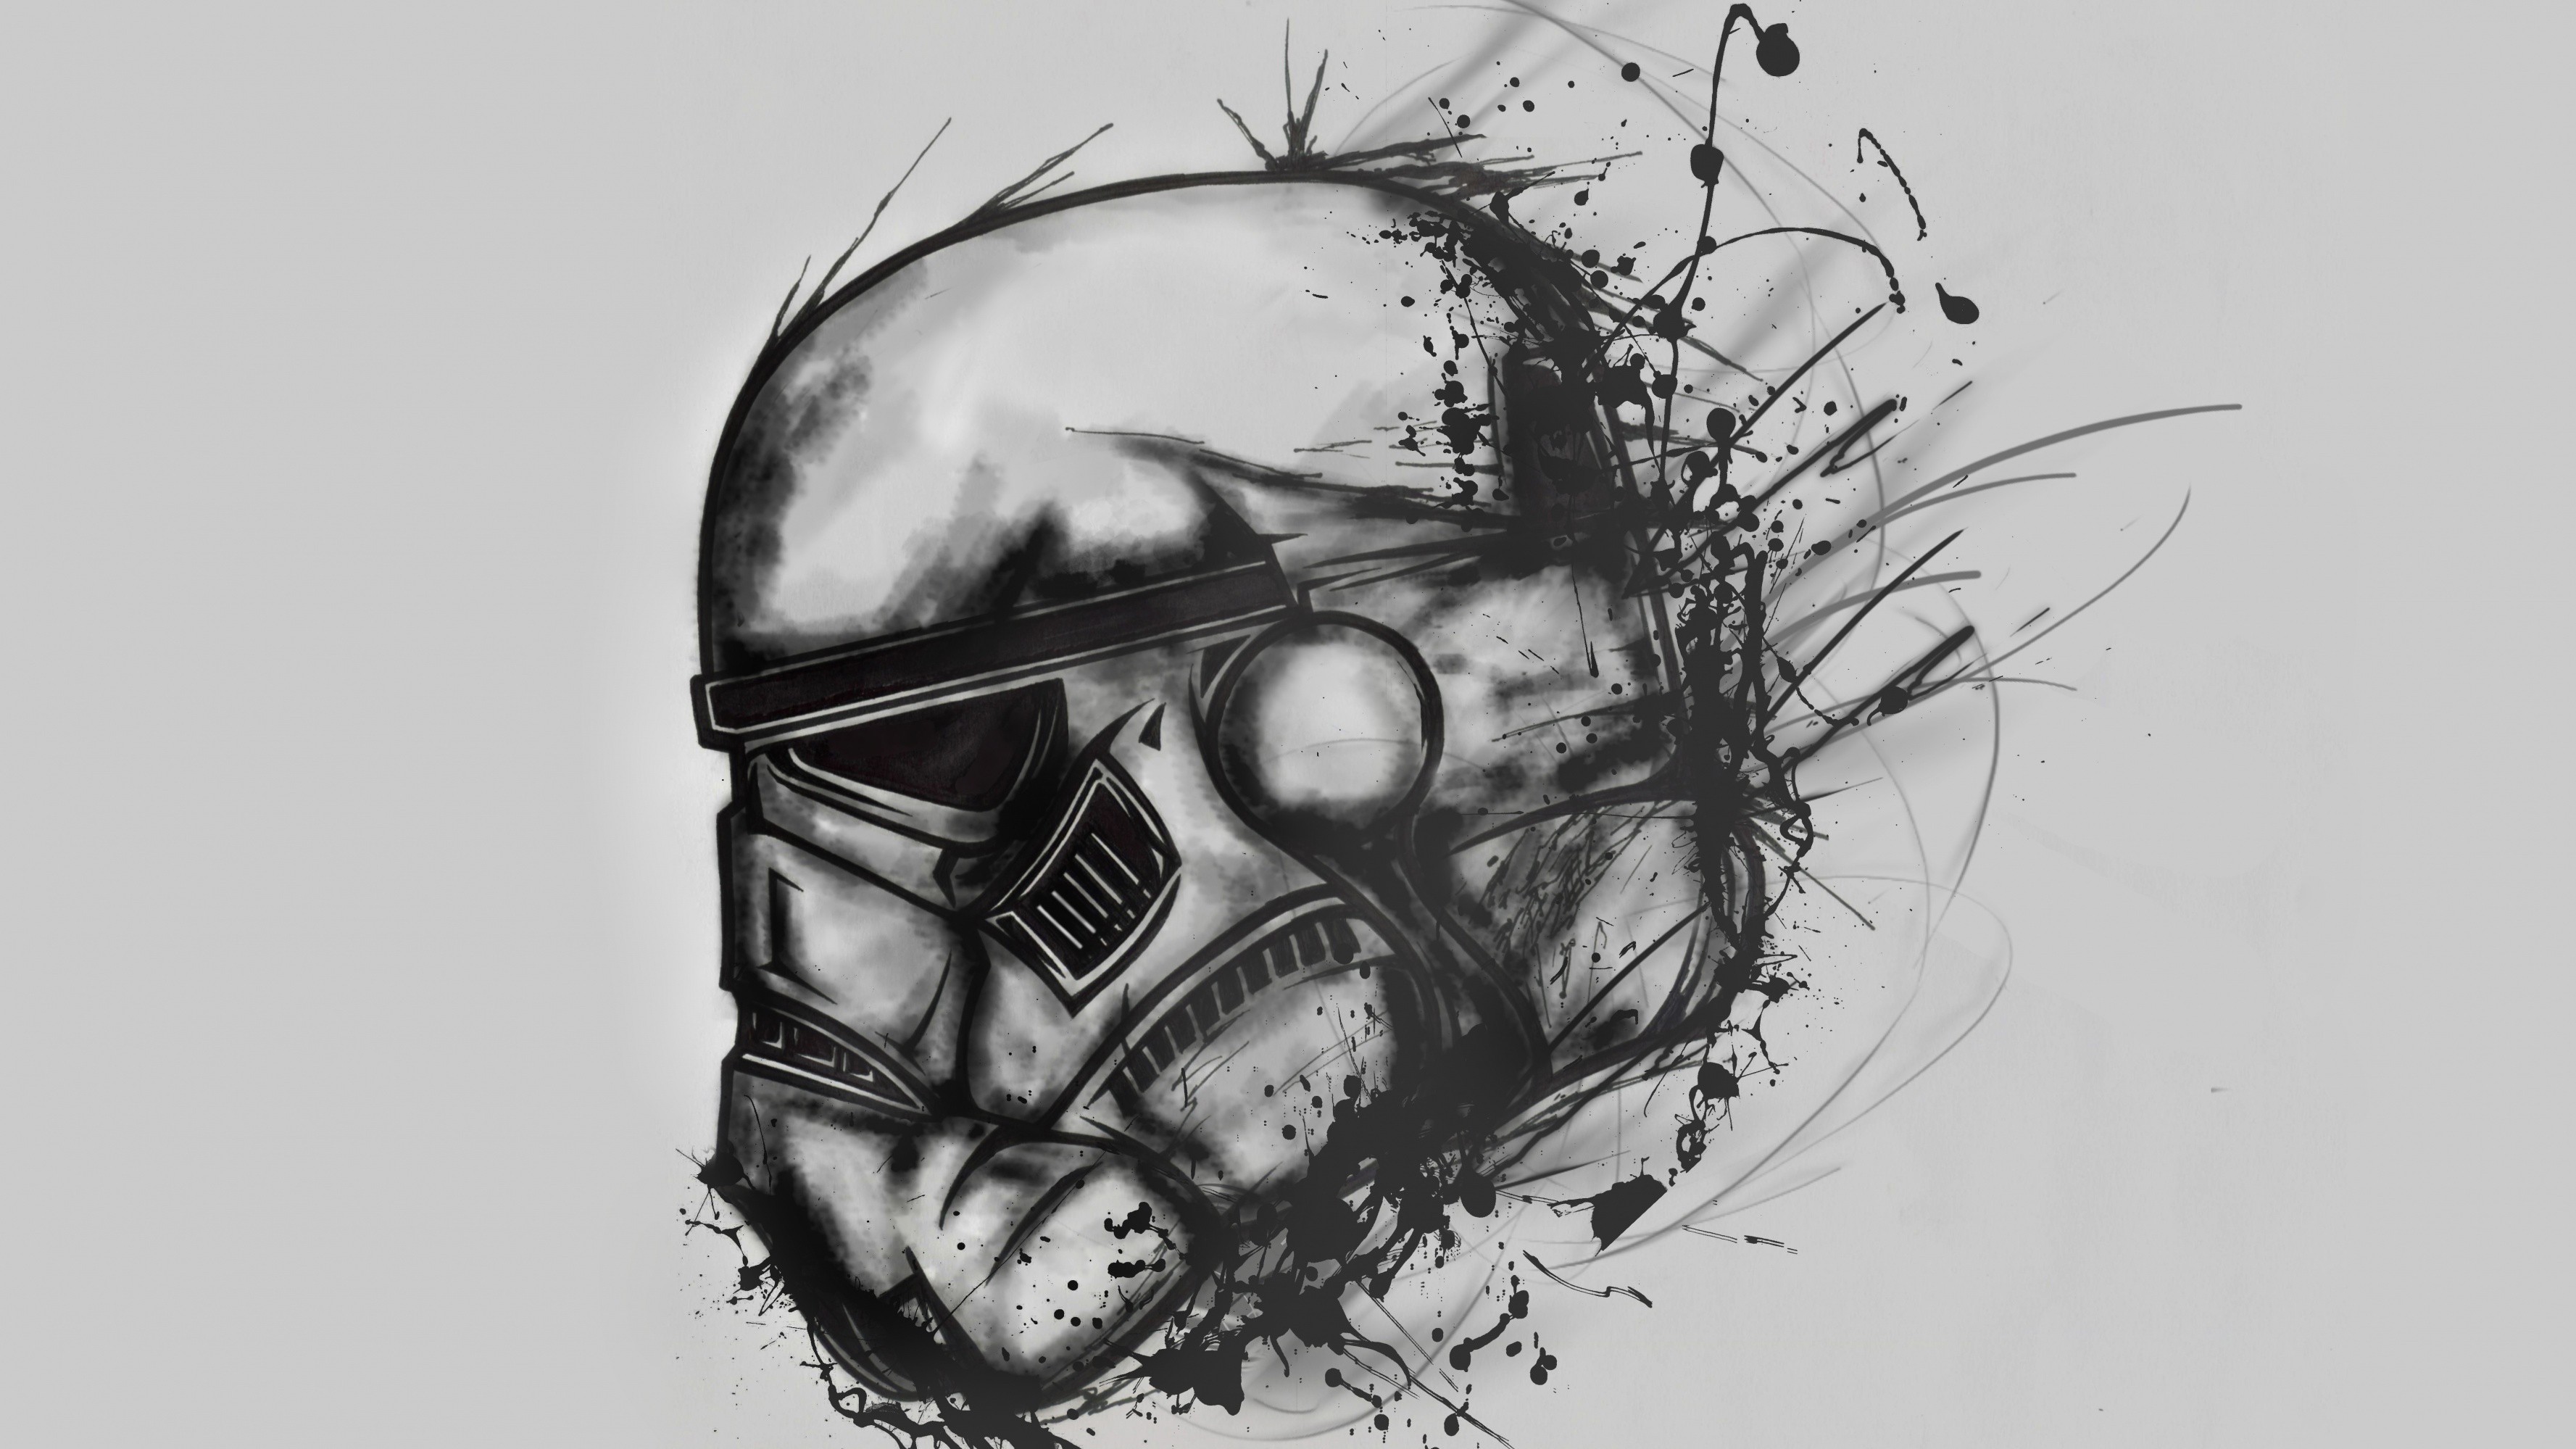 stormtrooper wallpaper,personal protective equipment,drawing,sketch,illustration,helmet